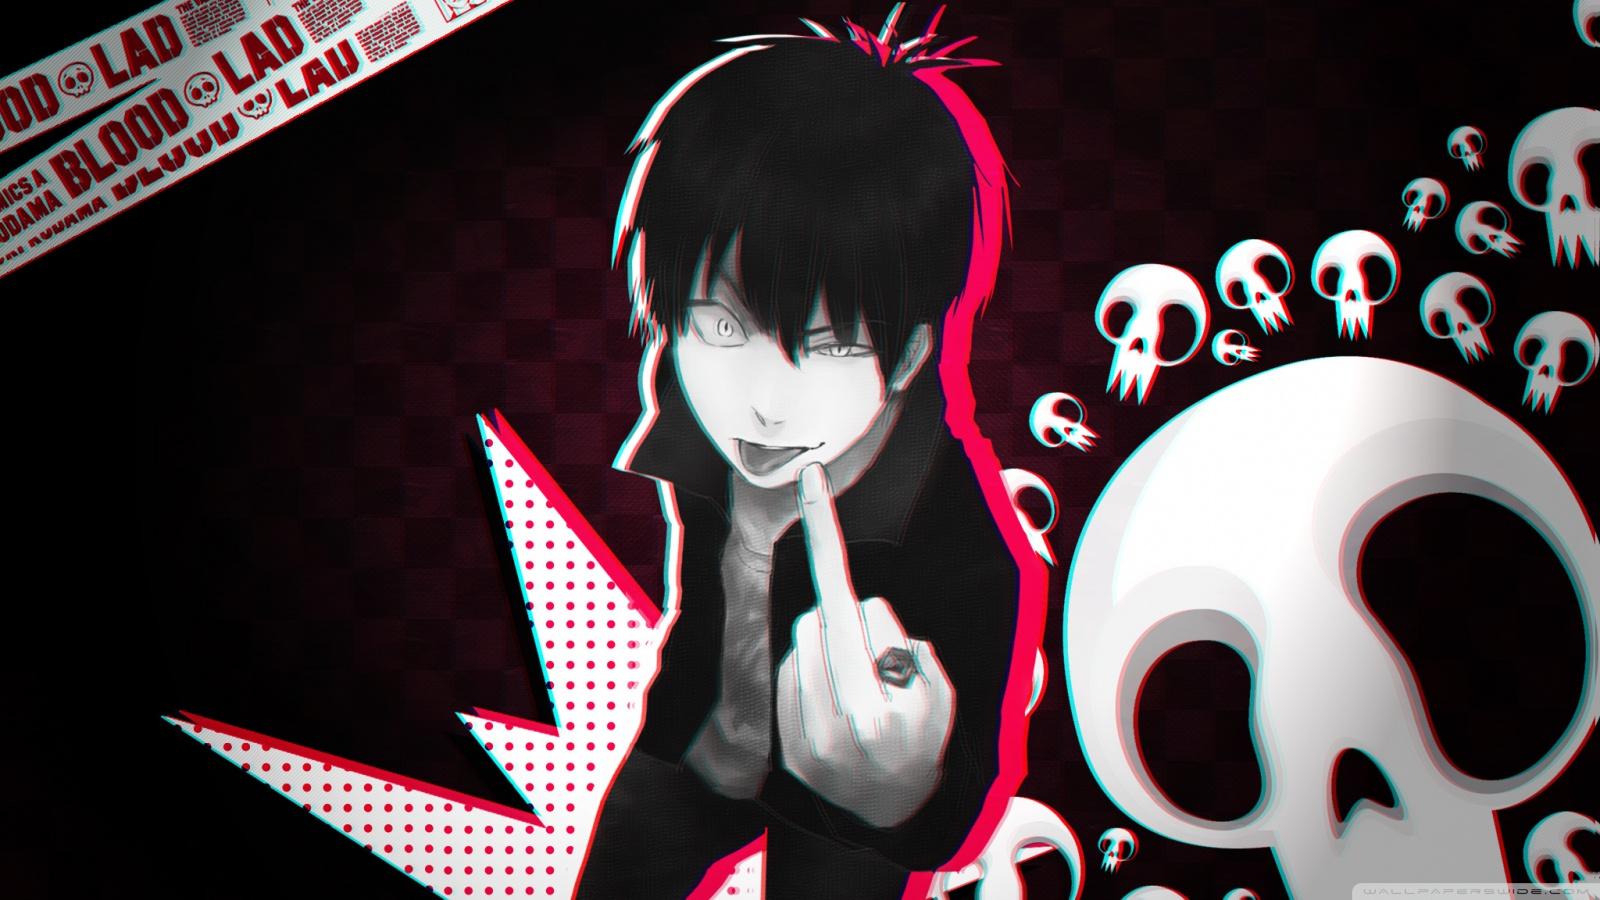 Anime Blood Lad Desktop Background. The Champion Wallpaper